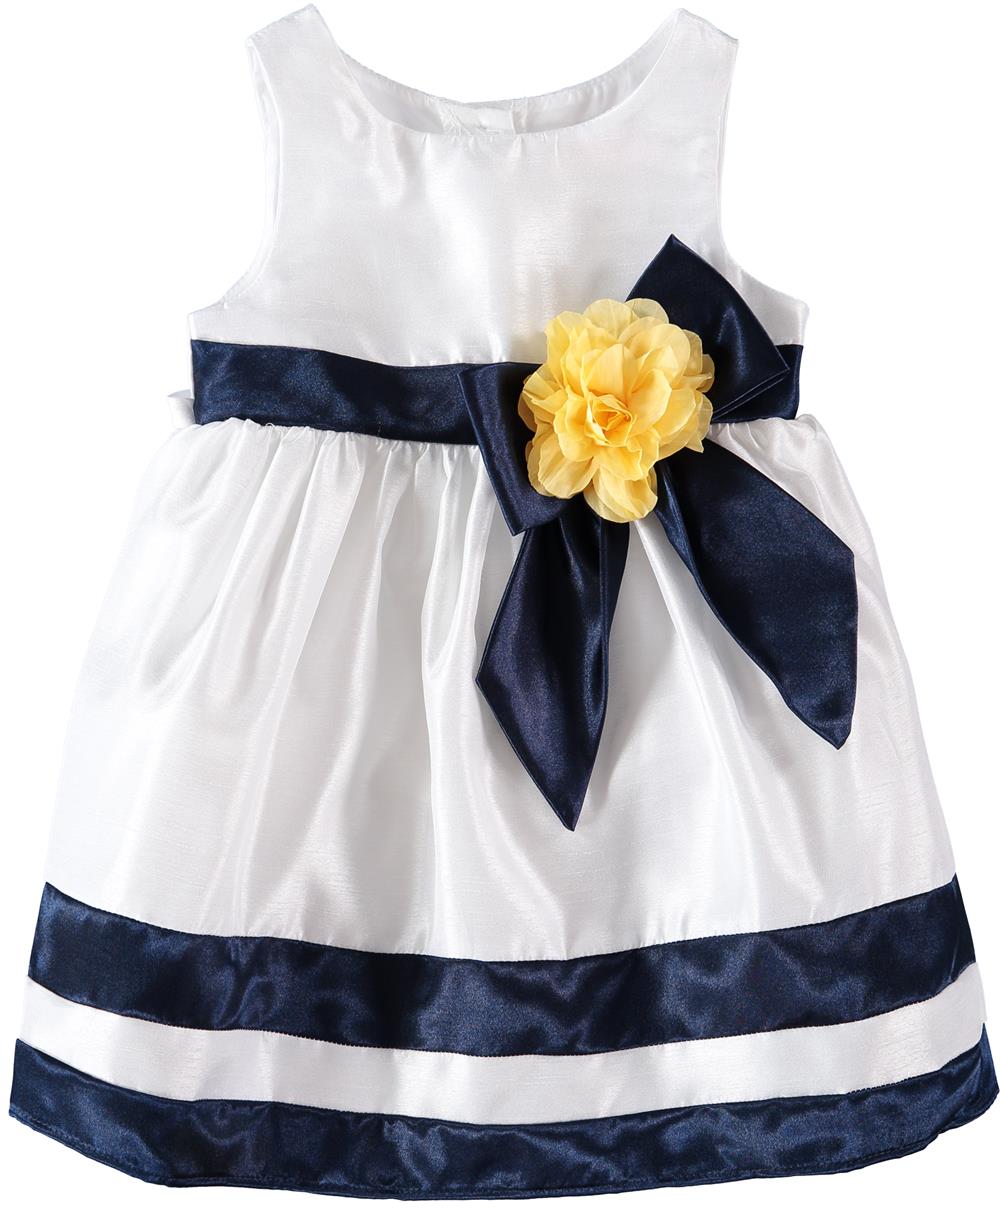 Youngland Girls 2T-4T Bow Nautical Dress